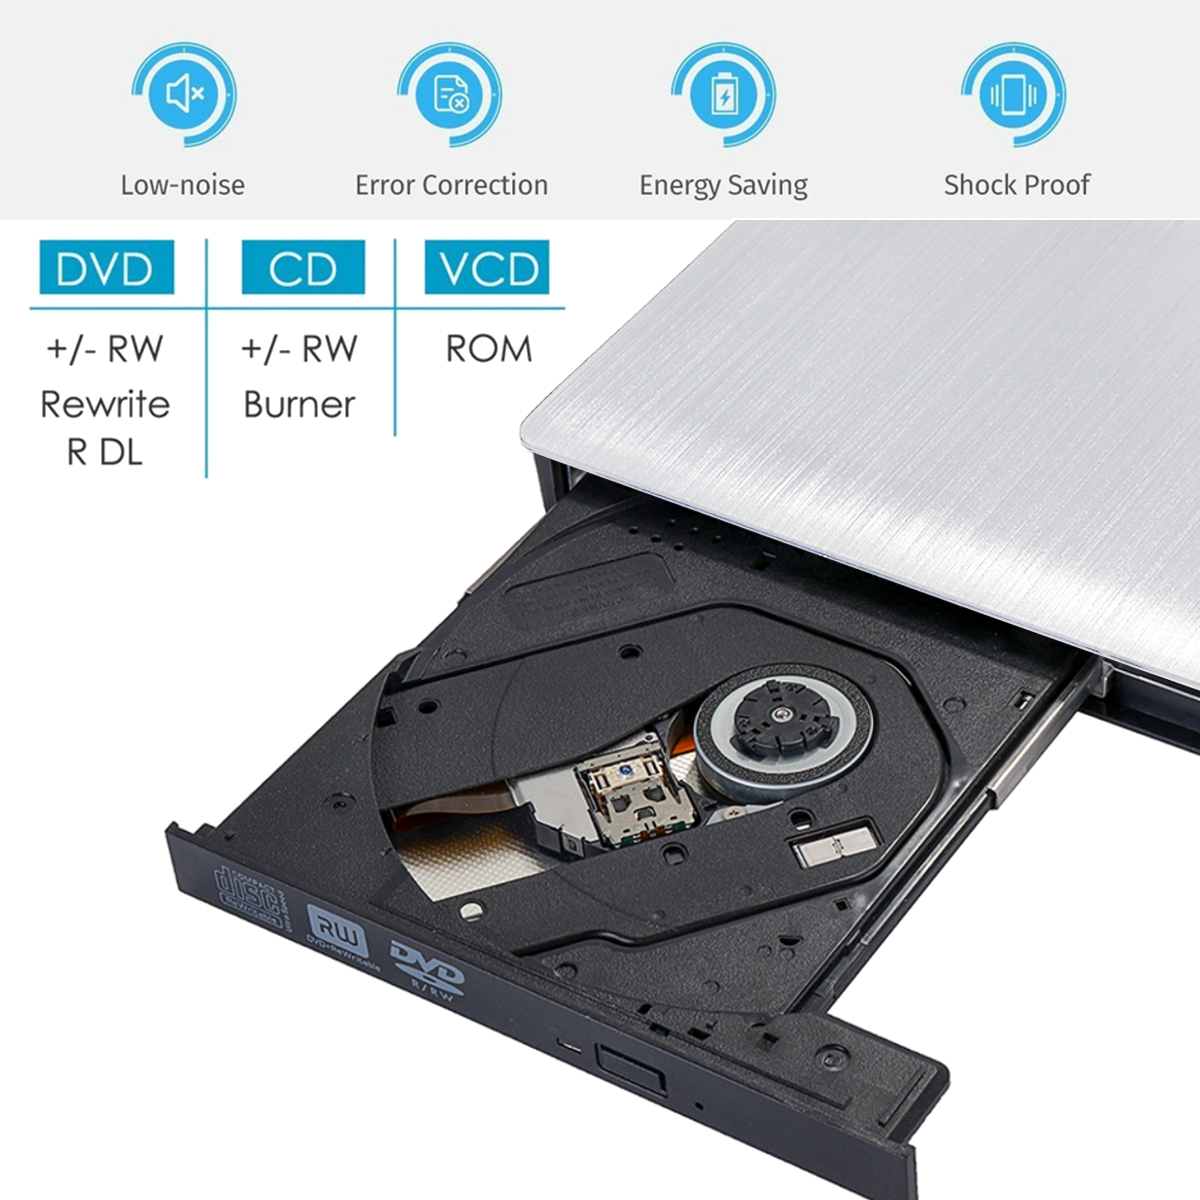 USB 3.0 Slim External DVD Optical Drive DVD-RW CD-RW Combo Drive Burner Reader Player 22